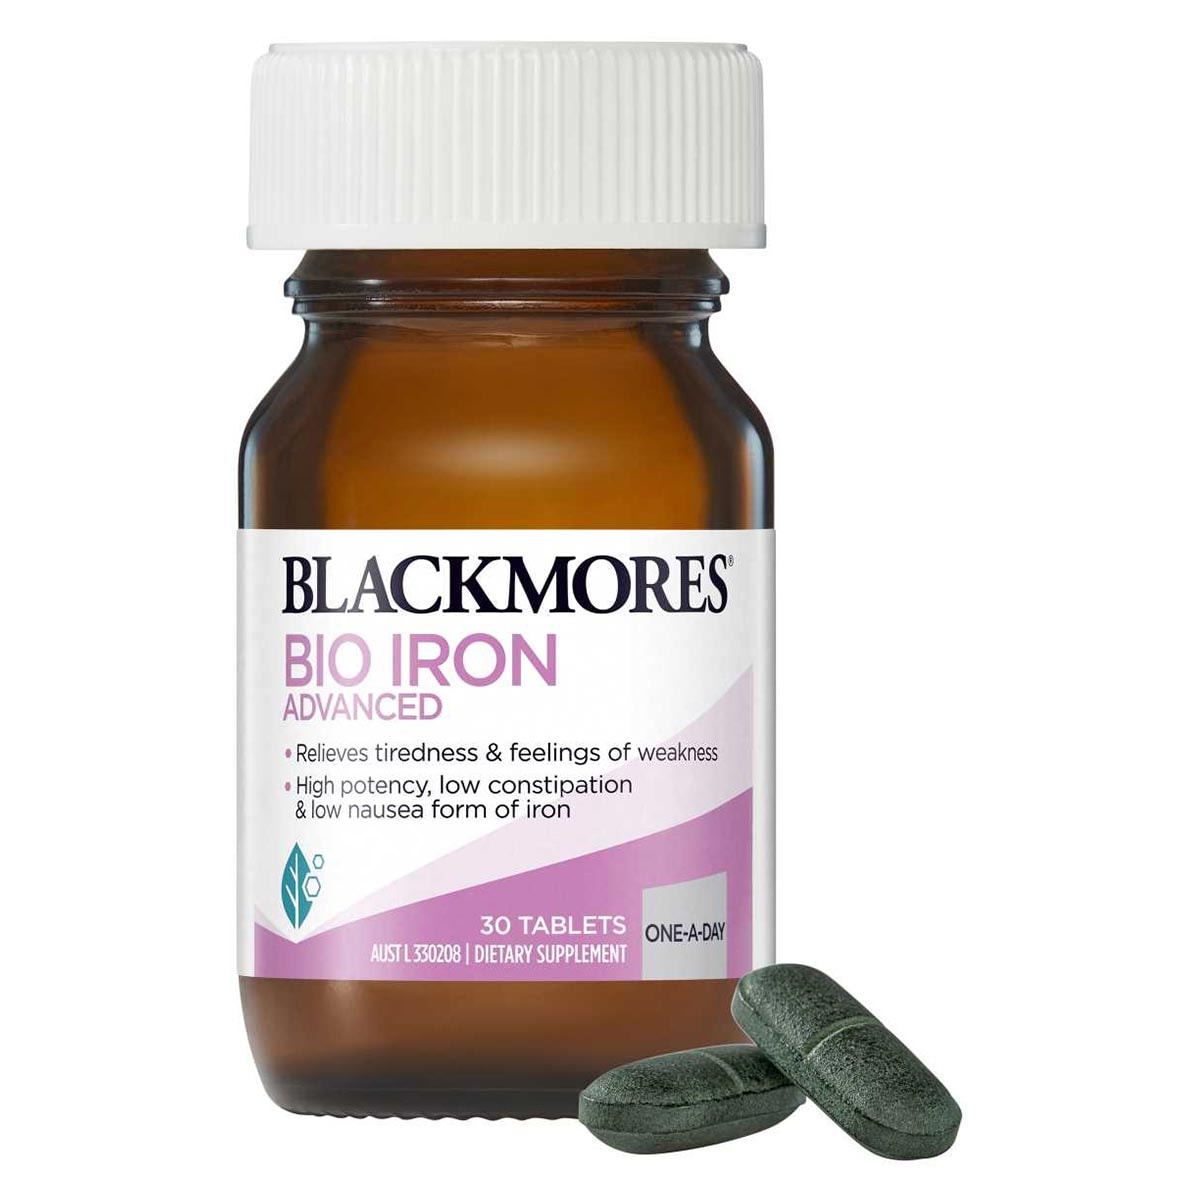 Blackmores Bio Iron Advanced 30 Tablets